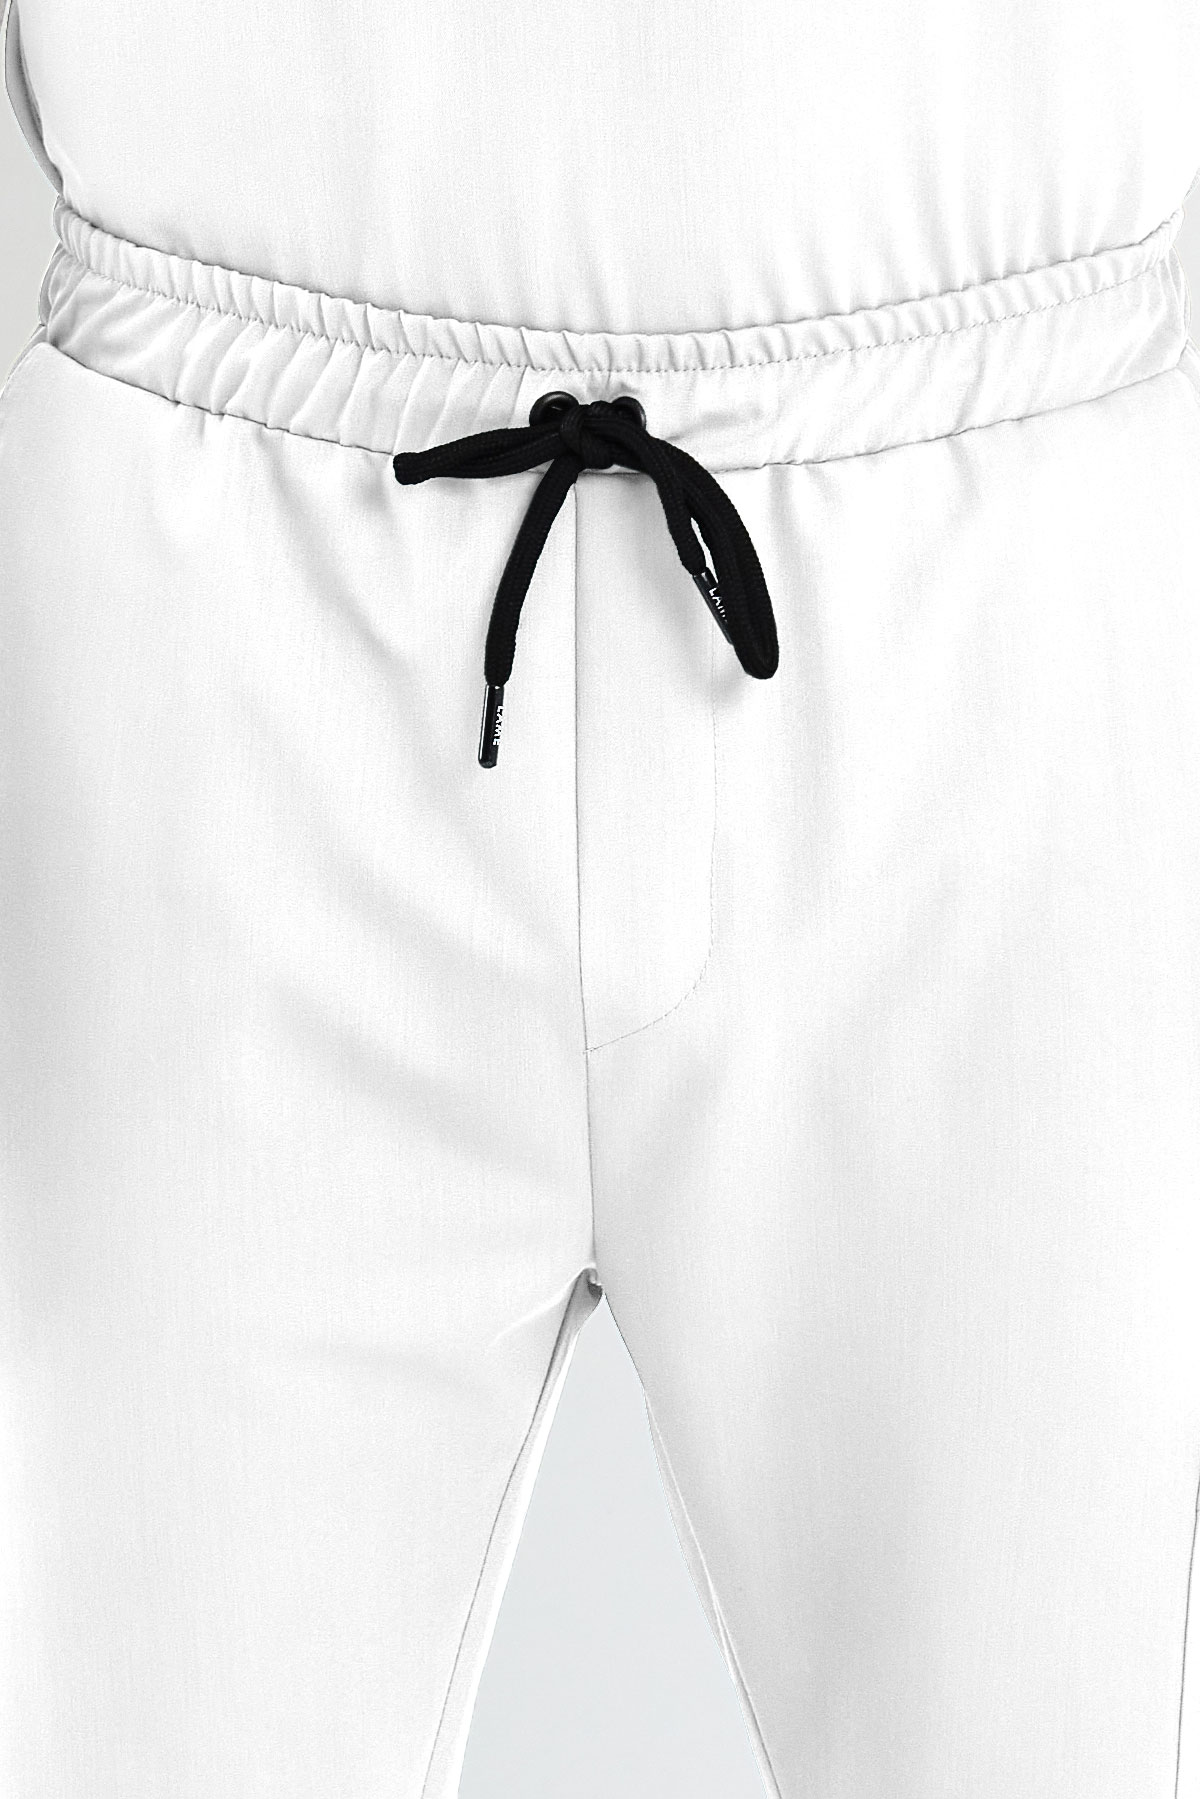 3004 Luxury Beyaz Pantolon